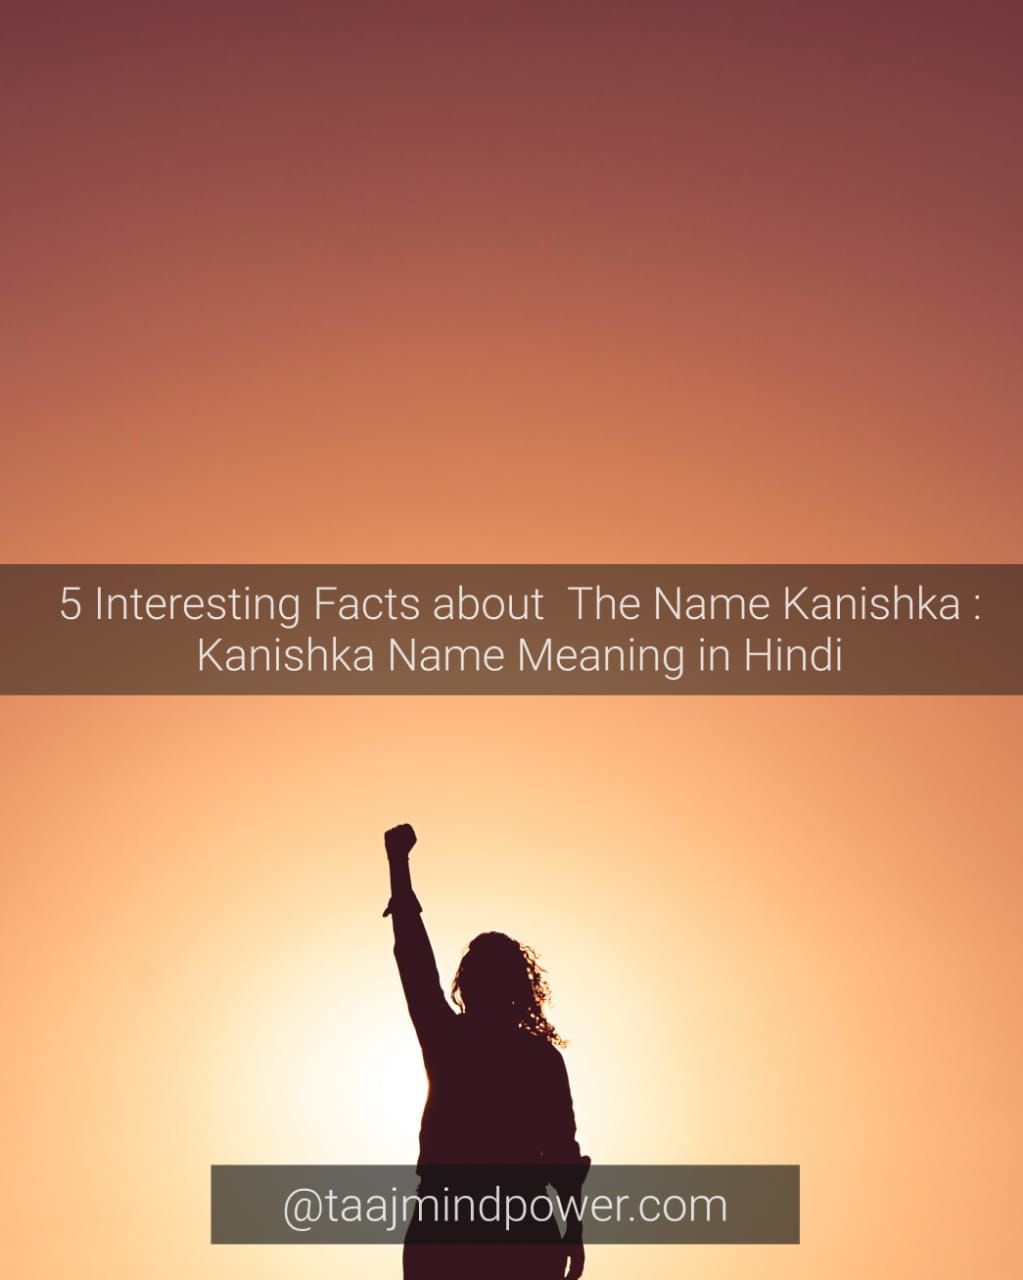 Kanishka Name Meaning in Hindi